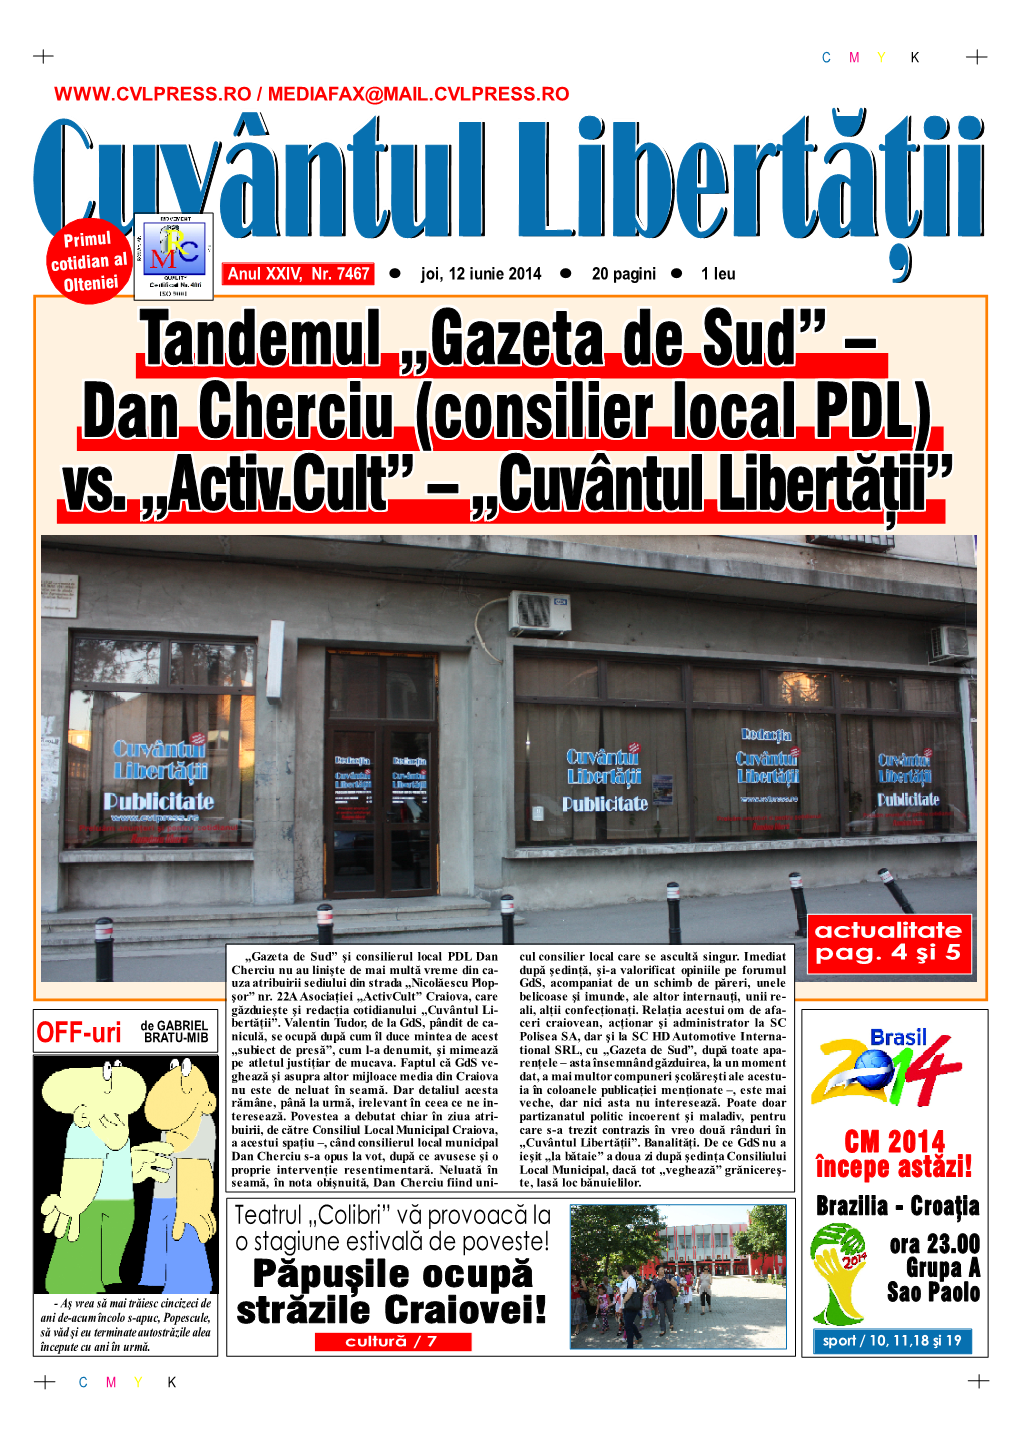 Tandemul „Gazeta De Sud” – Dan Cherciu (Consilier Local PDL) Vs